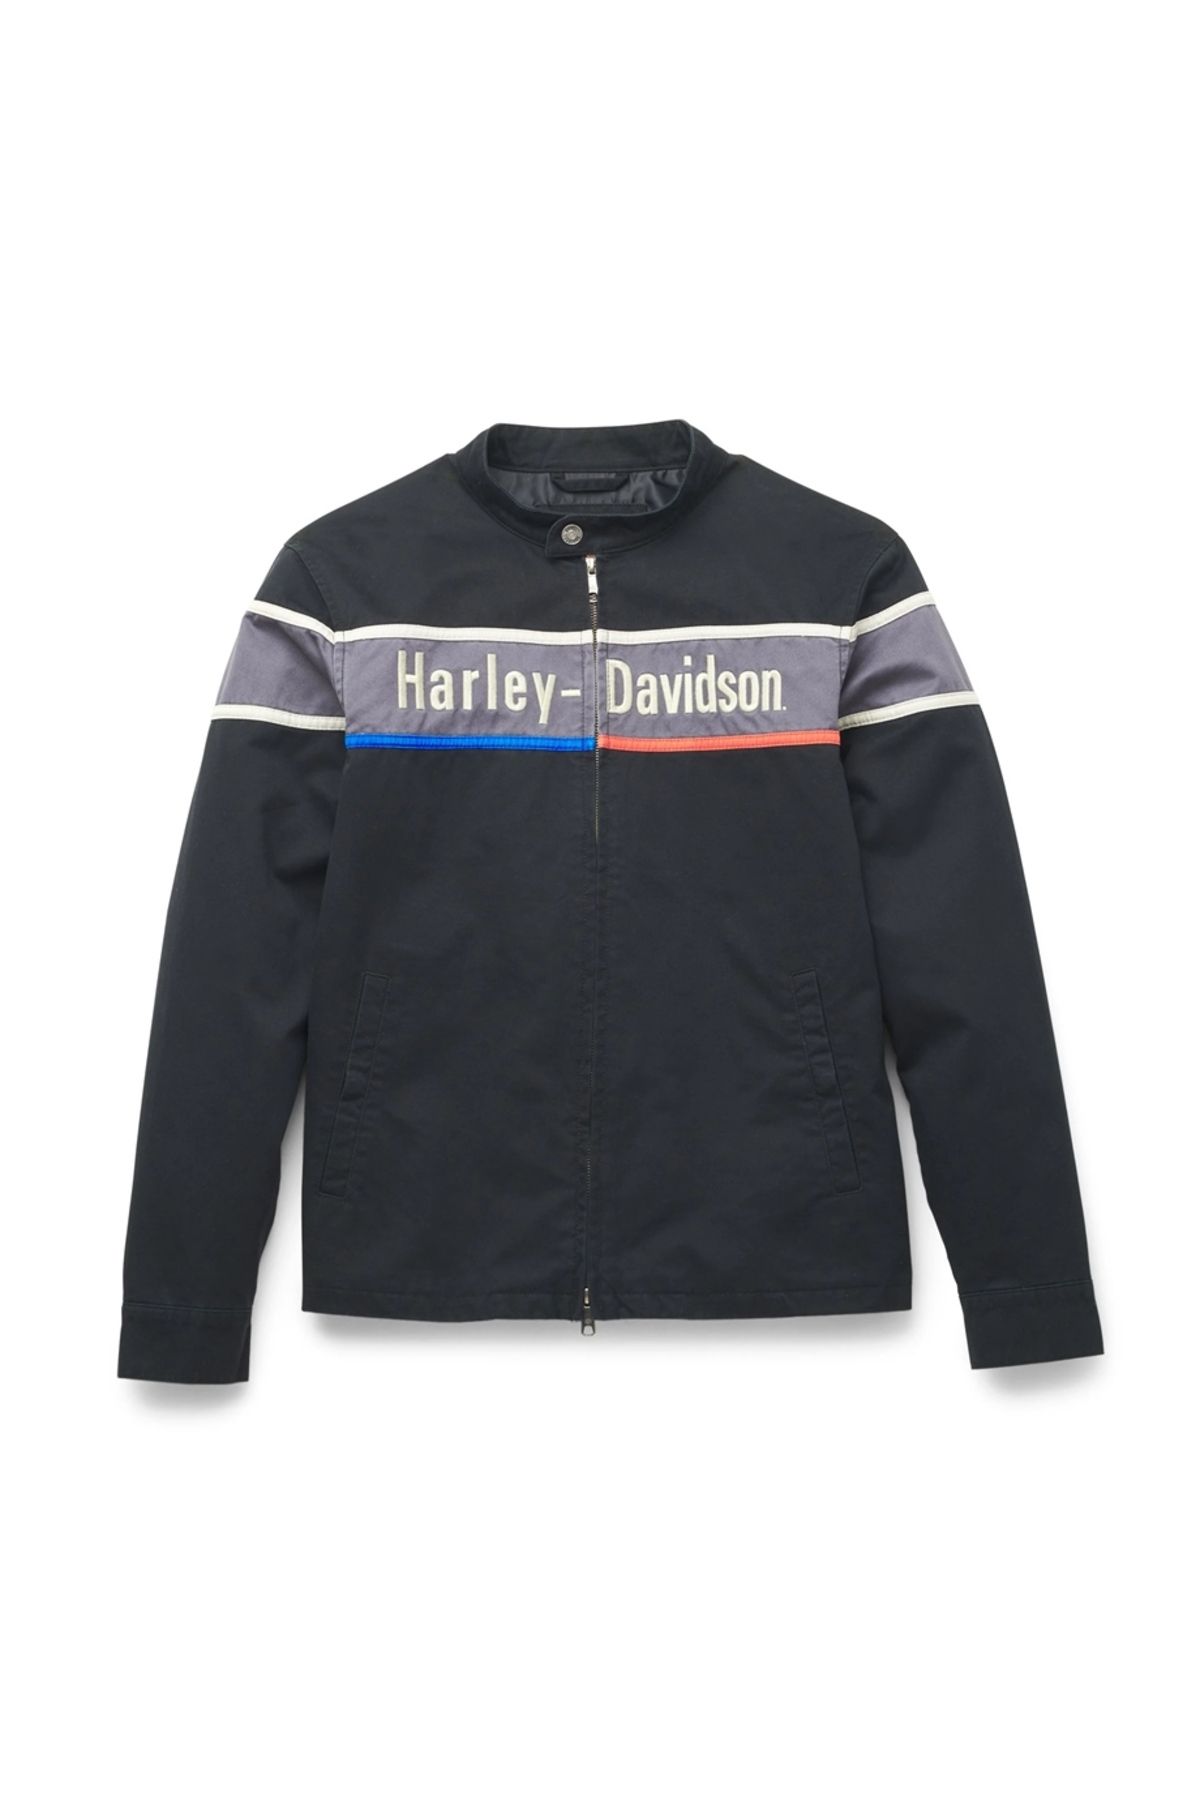 Harley Davidson Harley-davidson Men's Bar Jacket